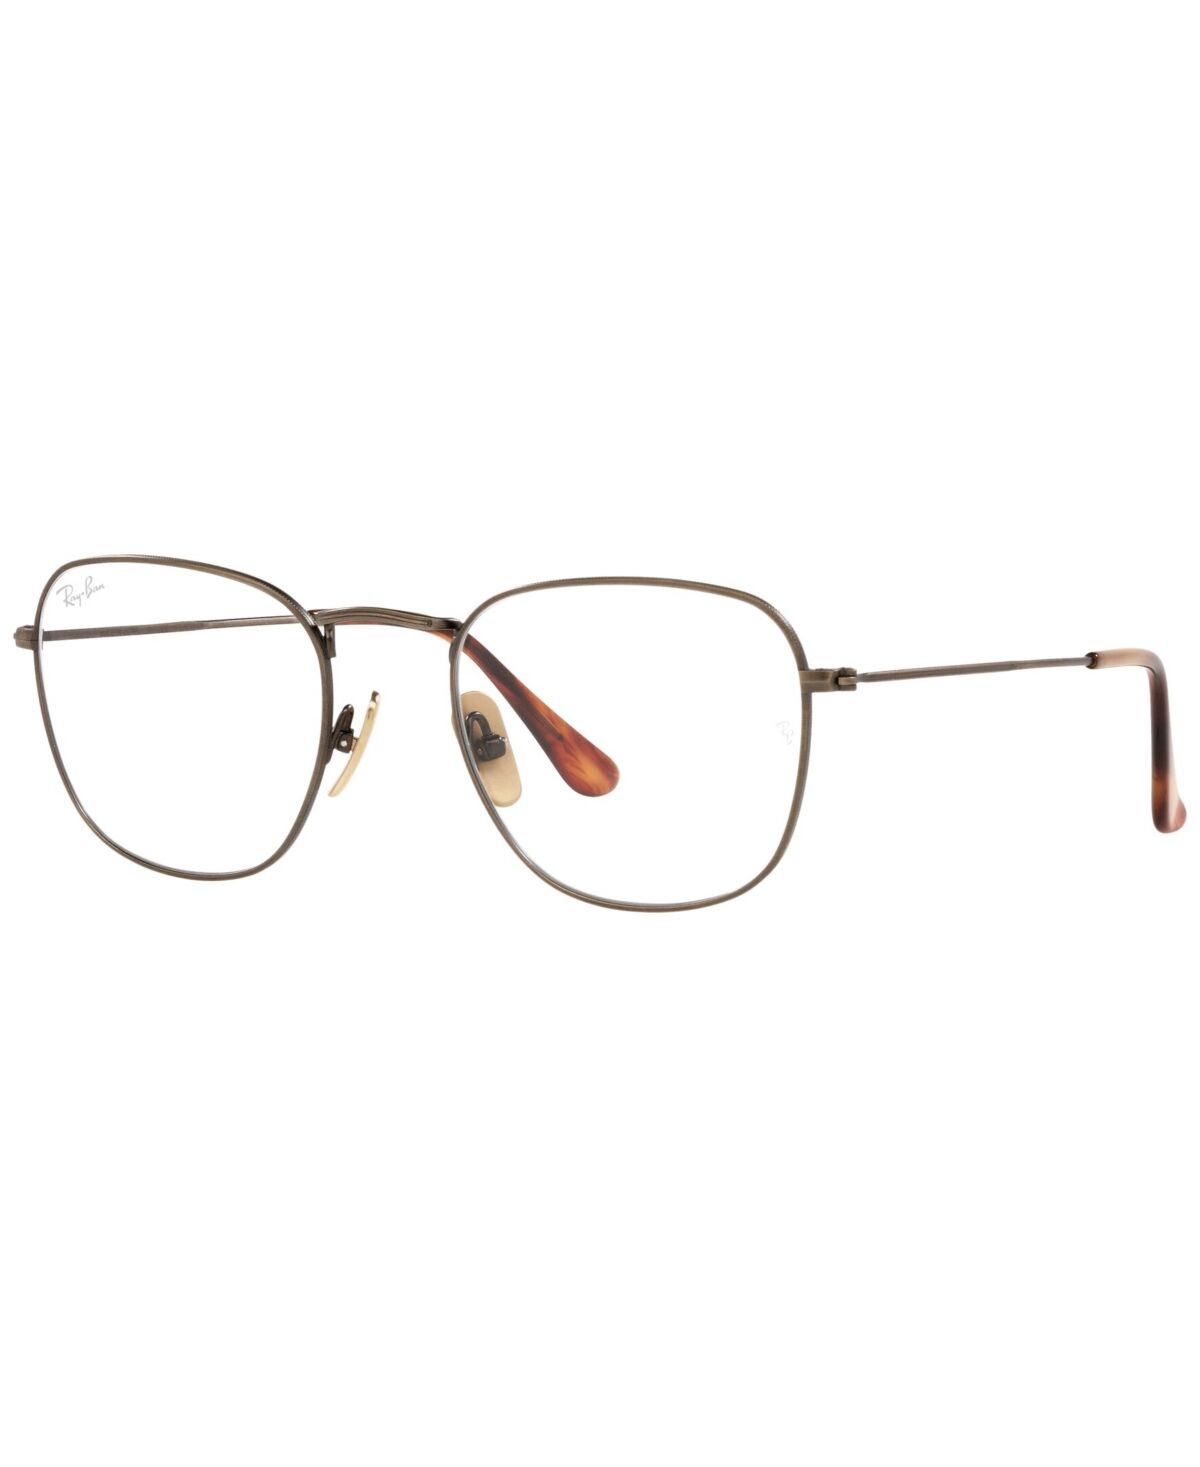 Ray-Ban RX8157 Frank Titanium Optics Men's Square Eyeglasses - Demigloss Antique Gold-Tone